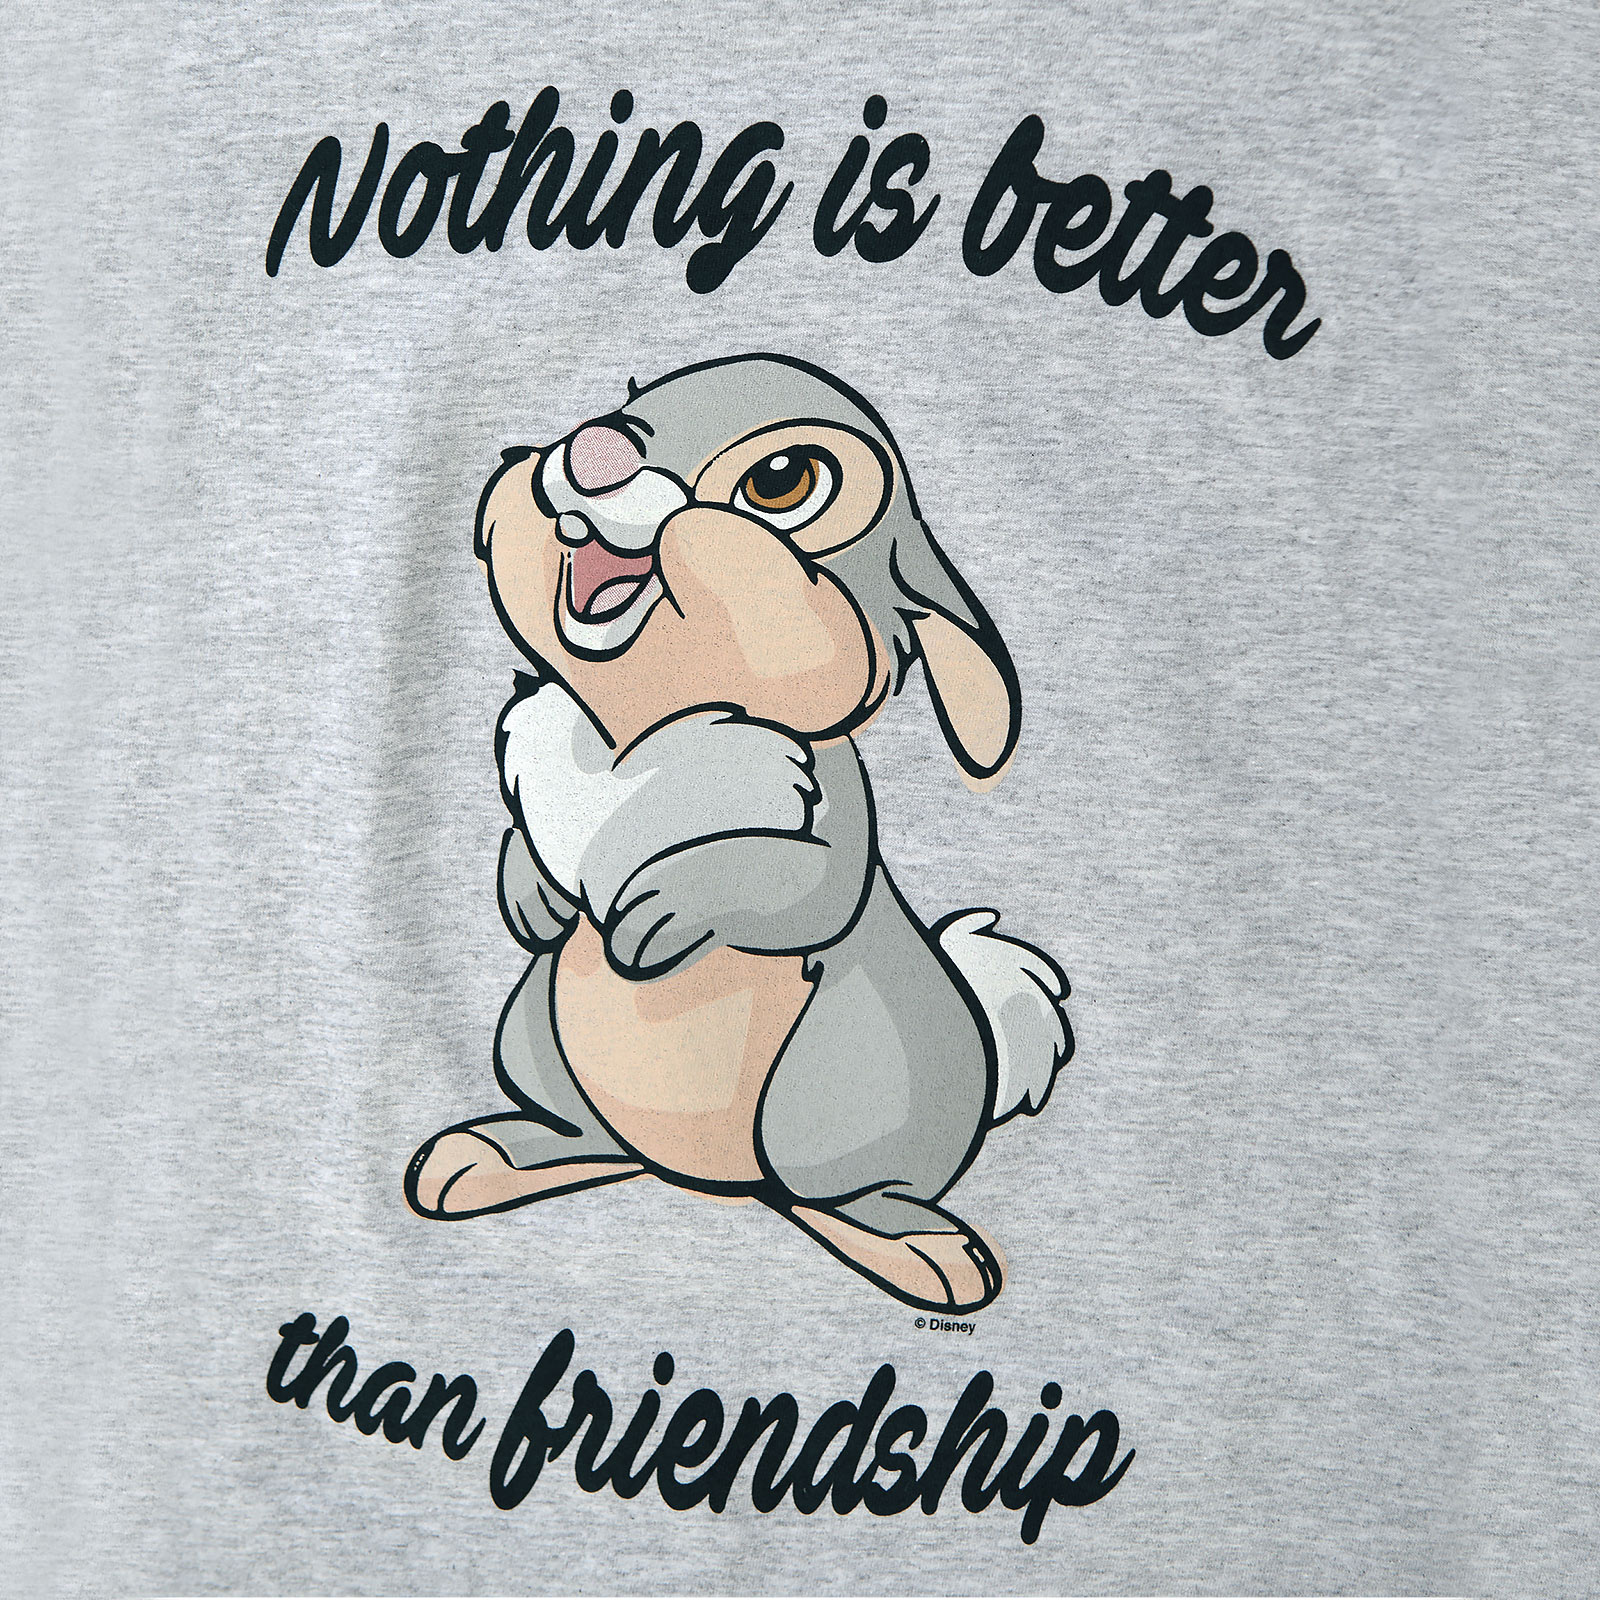 Bambi - Klopfer Friendship T-Shirt Damen grau